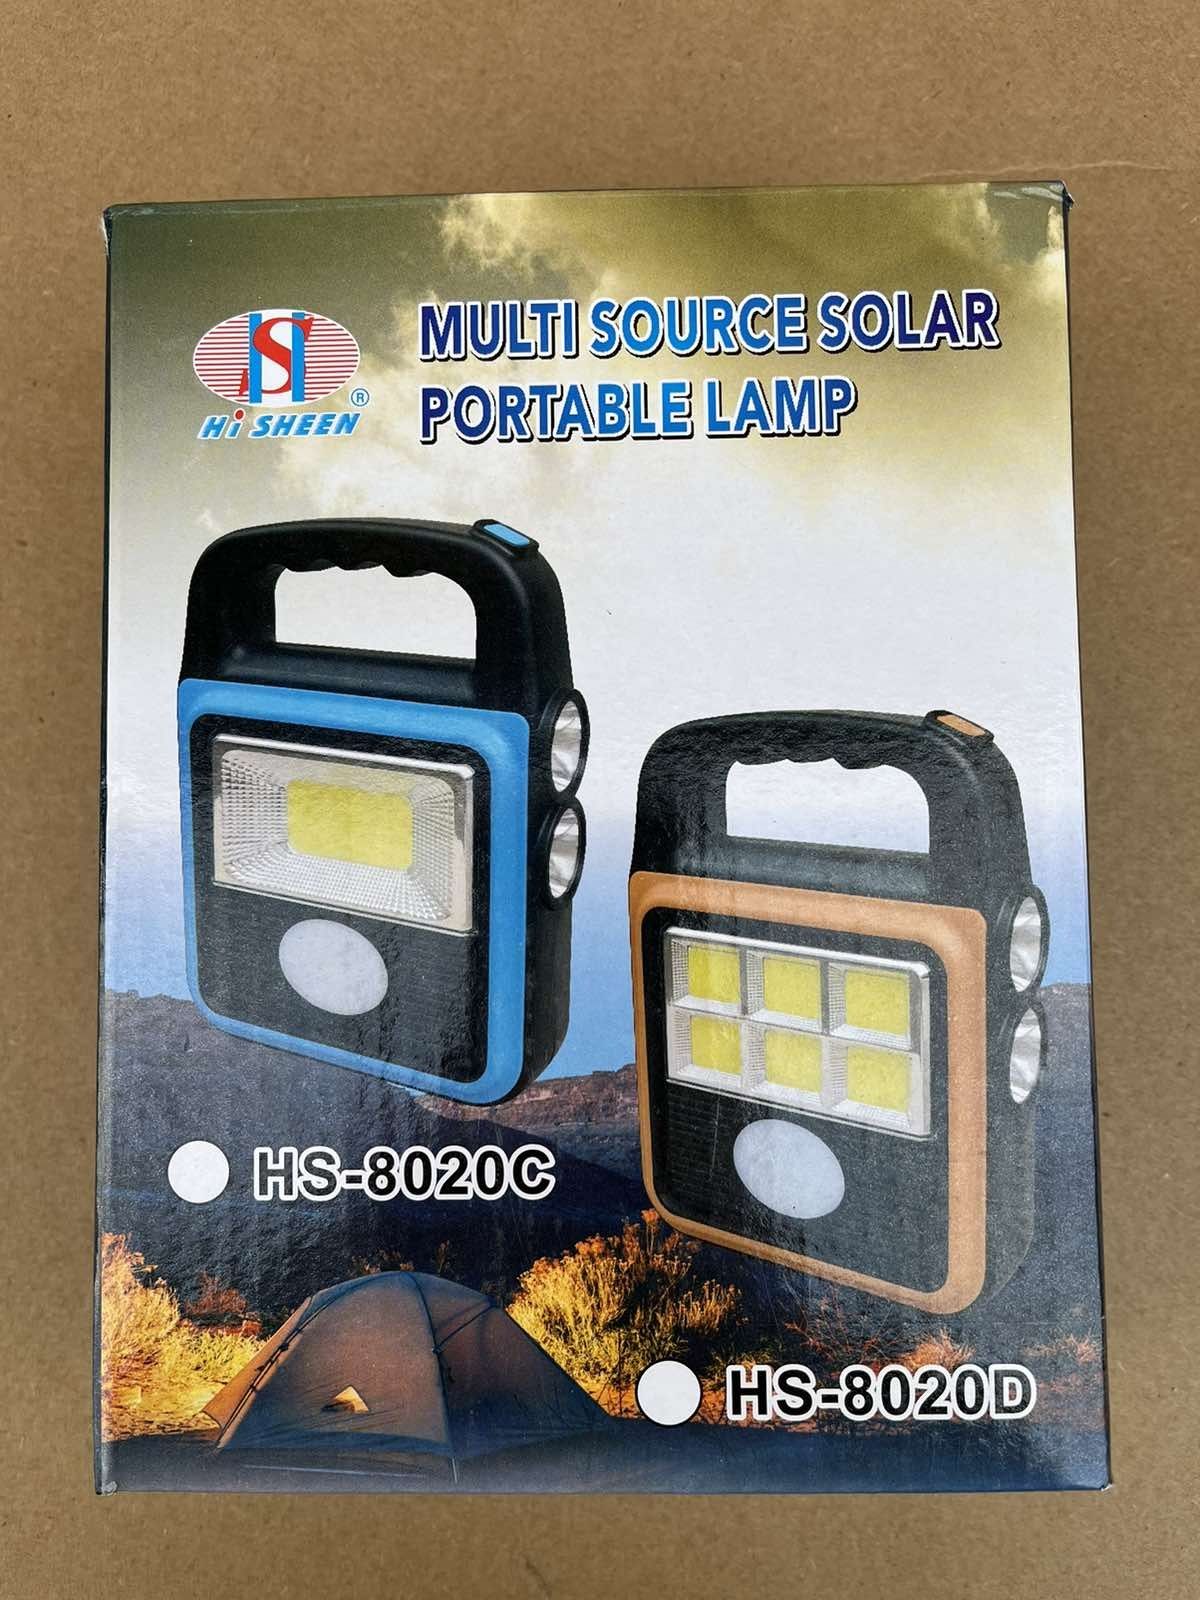 Лампа SH 8020 Multi Source Solar rtable Lamp с повербанком. Фонарик